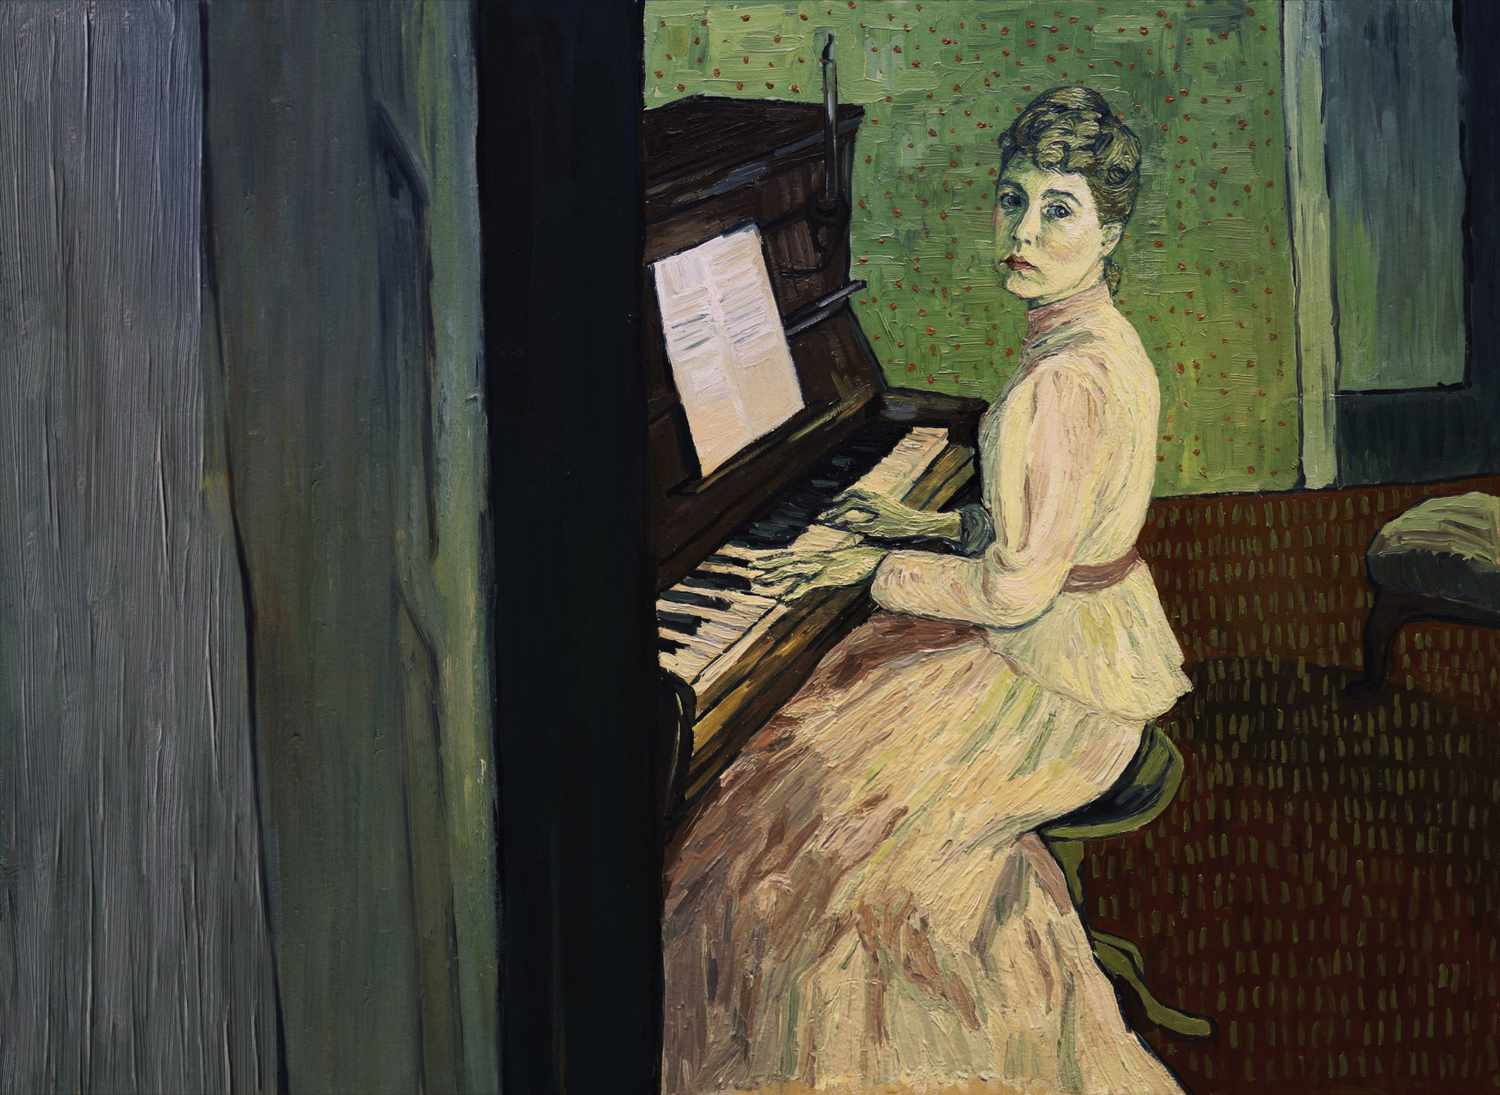 Marguerite Gachet (Saoirse Ronan) at the piano